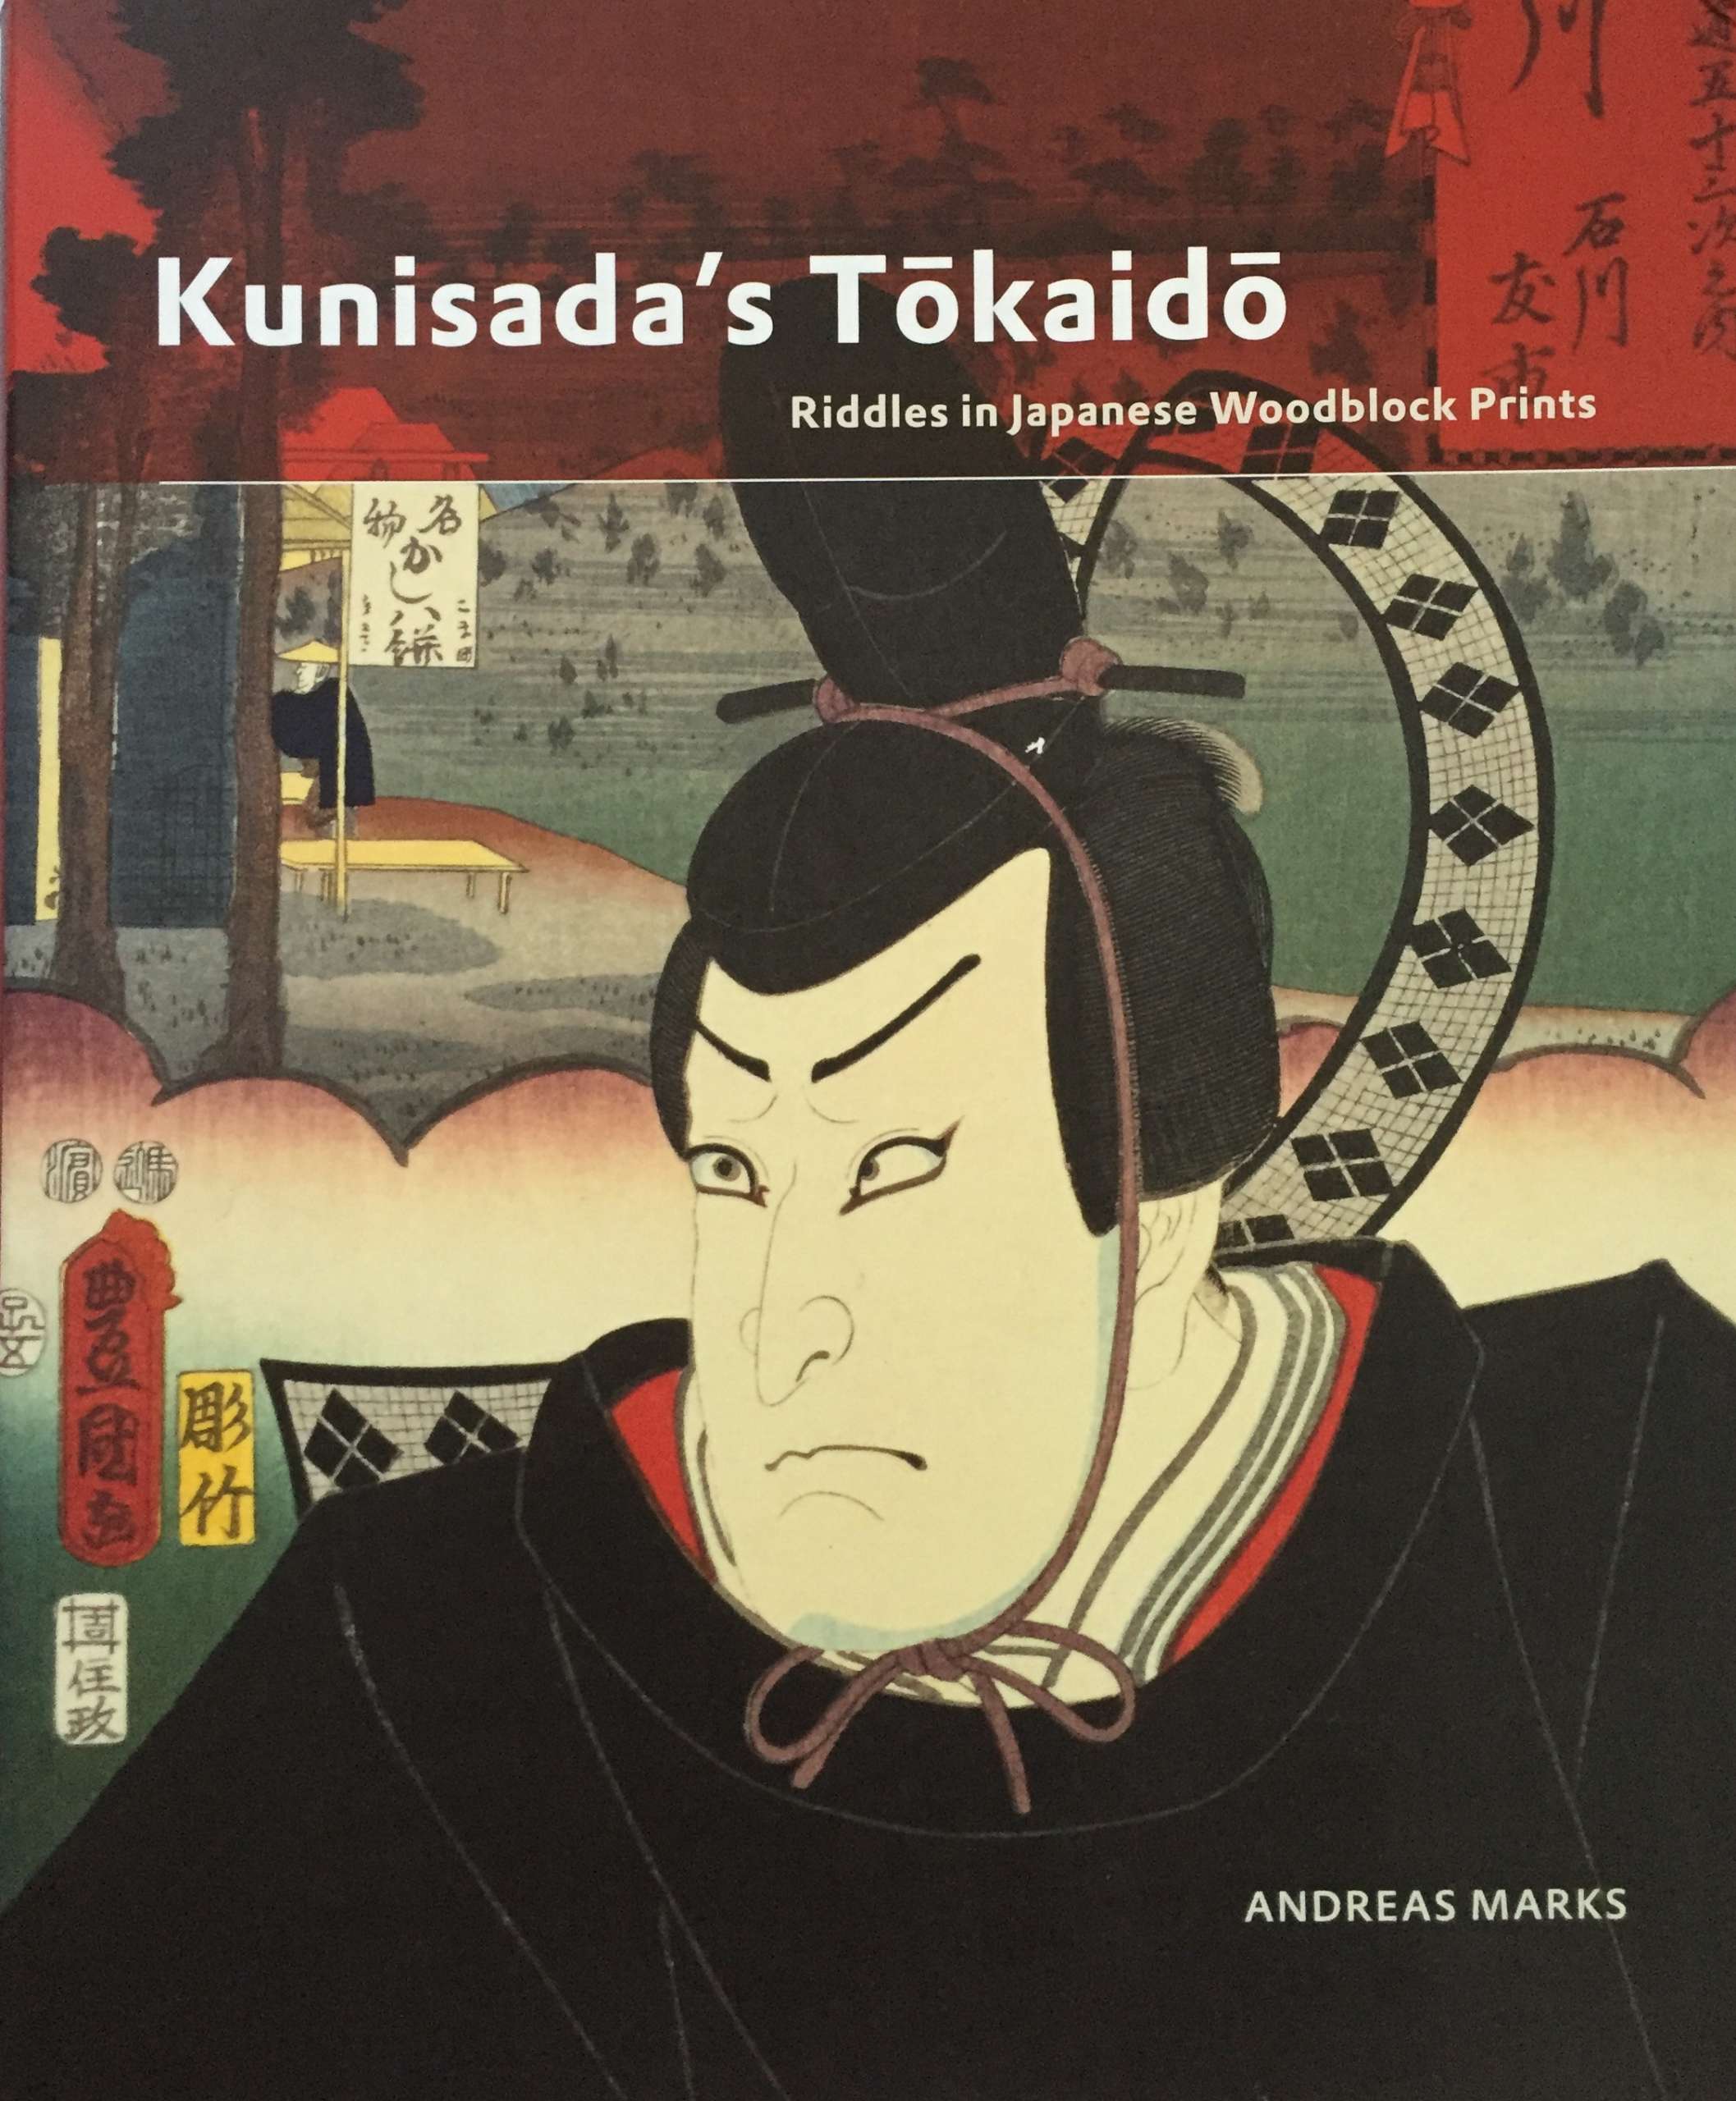 Andreas Marks. Kunisada's Tōkaidō. Riddles in Japanese Woodblock Prints. Hotei Publishing, 2013.